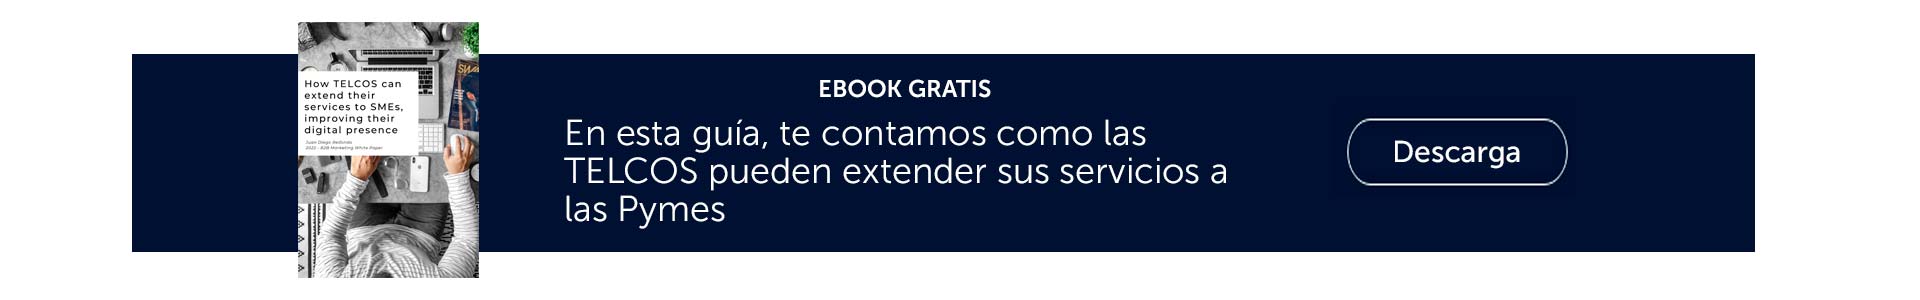 Ebook gratis